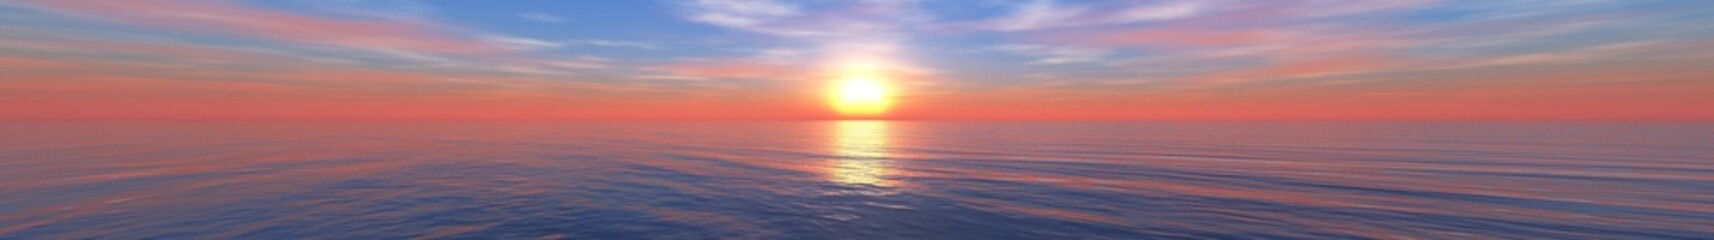 Fototapety  Panorama morza zachód słońca, wschód słońca. Baner.